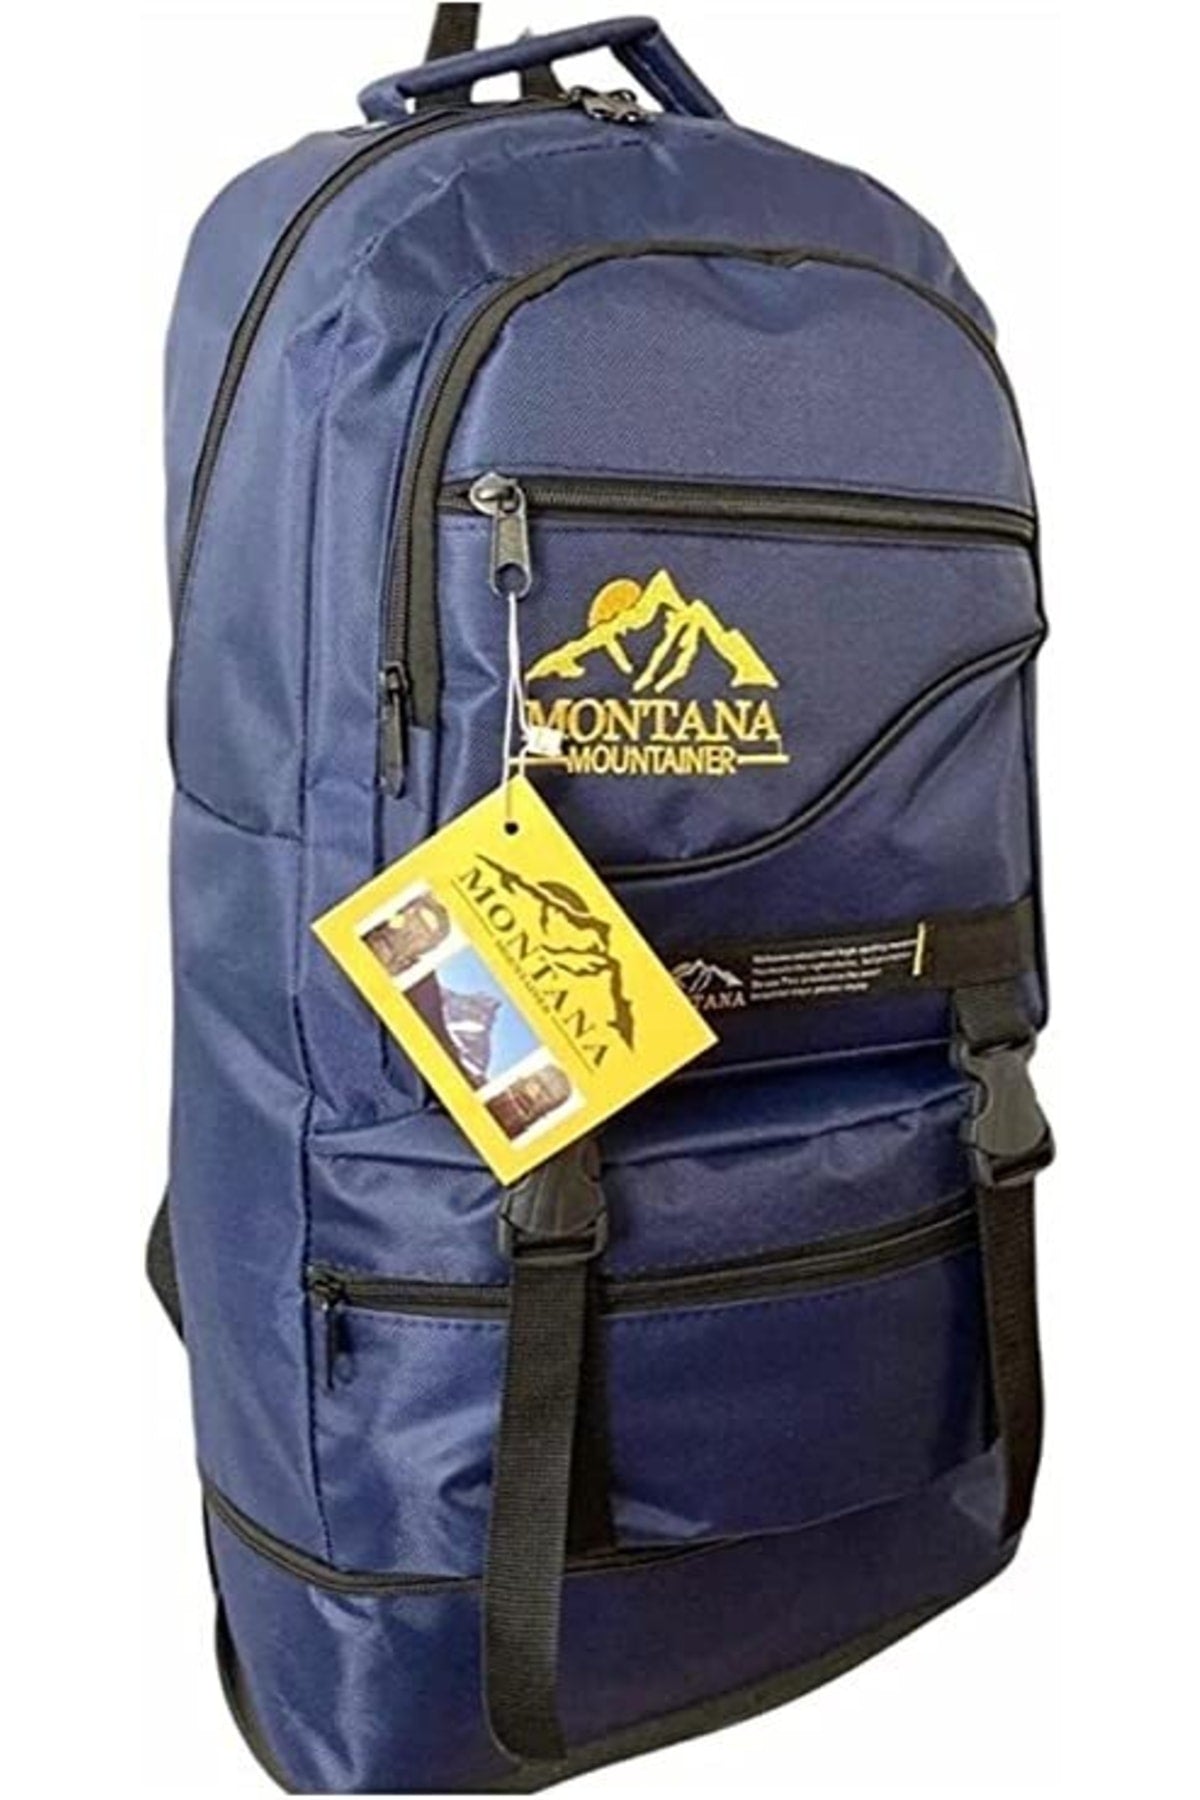 Montana 55+10 Liter Bellows Waterproof Multi-Compartment School-camper-travel-climber-outdoor Backpack